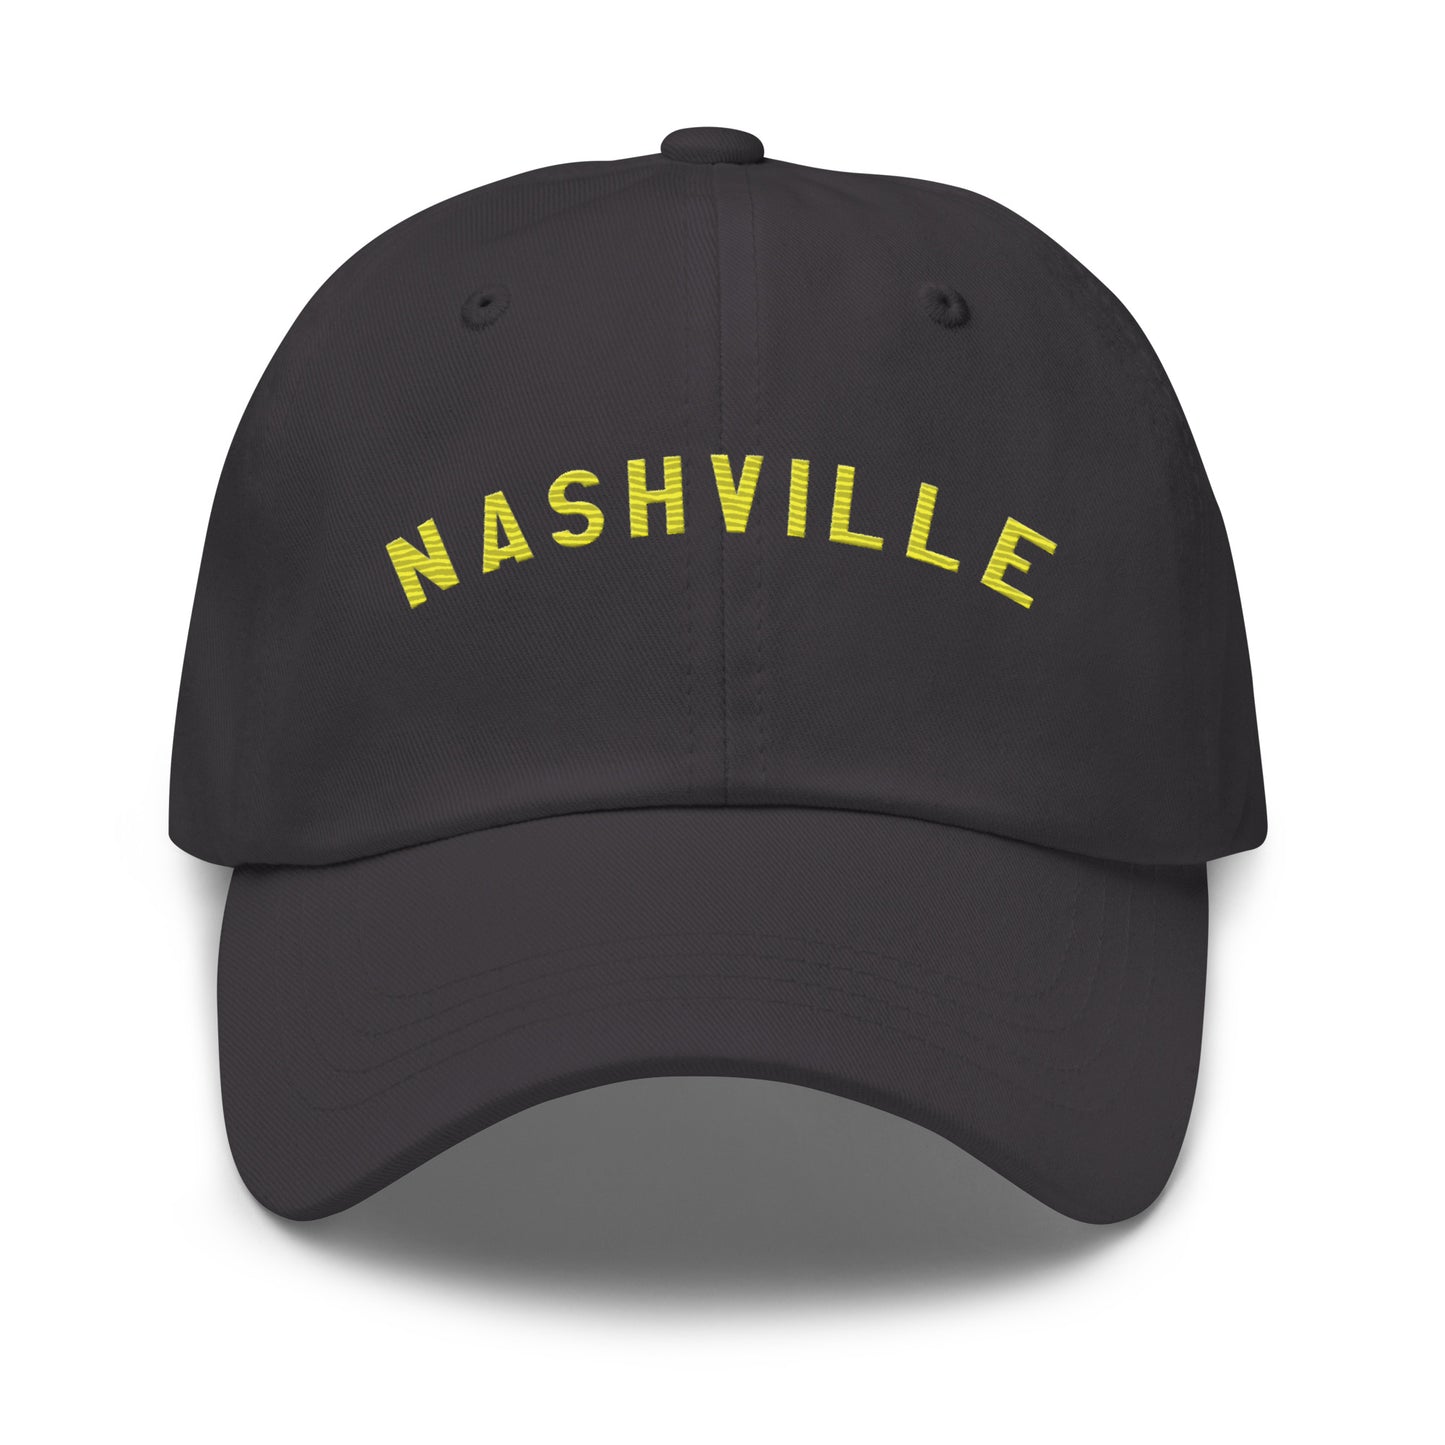 Nashville Curved text Dad hat